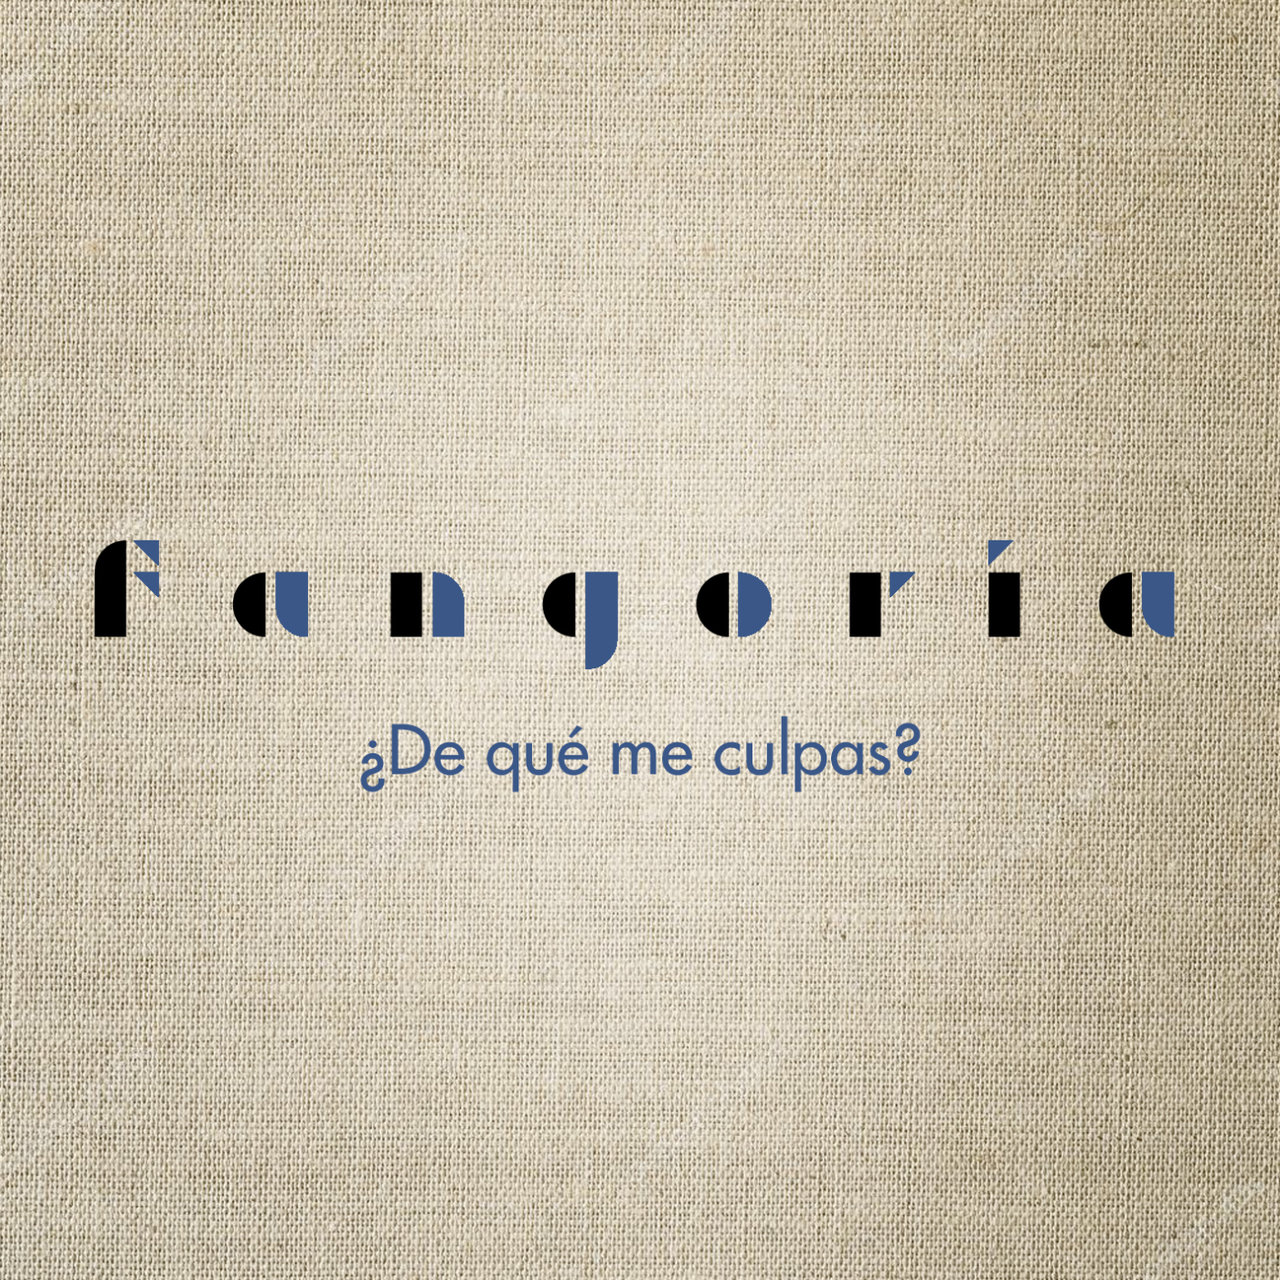 Fangoria featuring Ms Nina & JEDET — ¿De qué me culpas? cover artwork